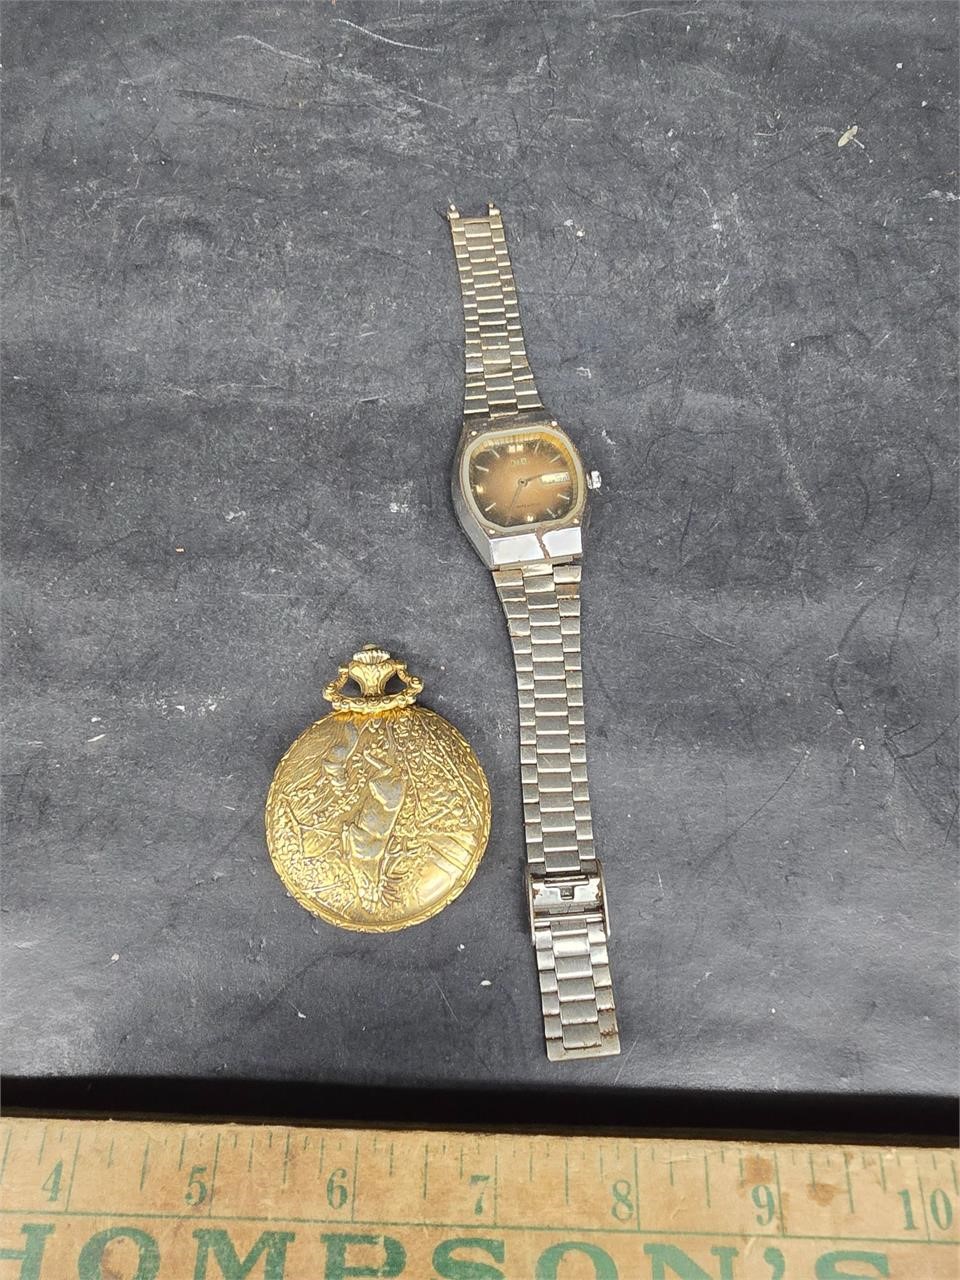 Pocket and wrist watch